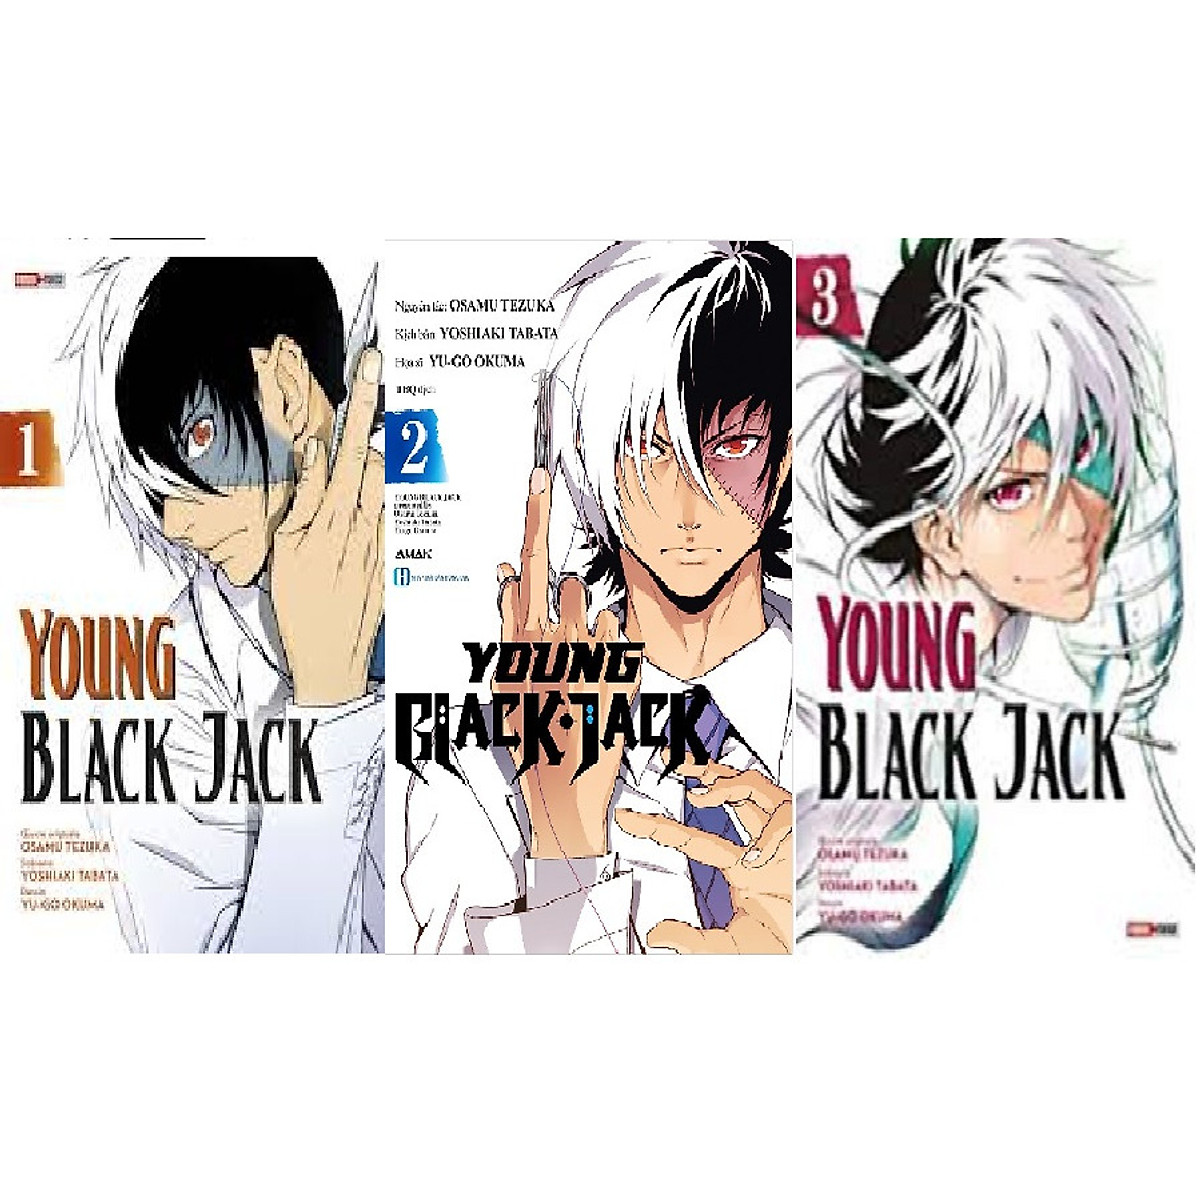 Young Black Jack (TV Series 2015– ) - IMDb